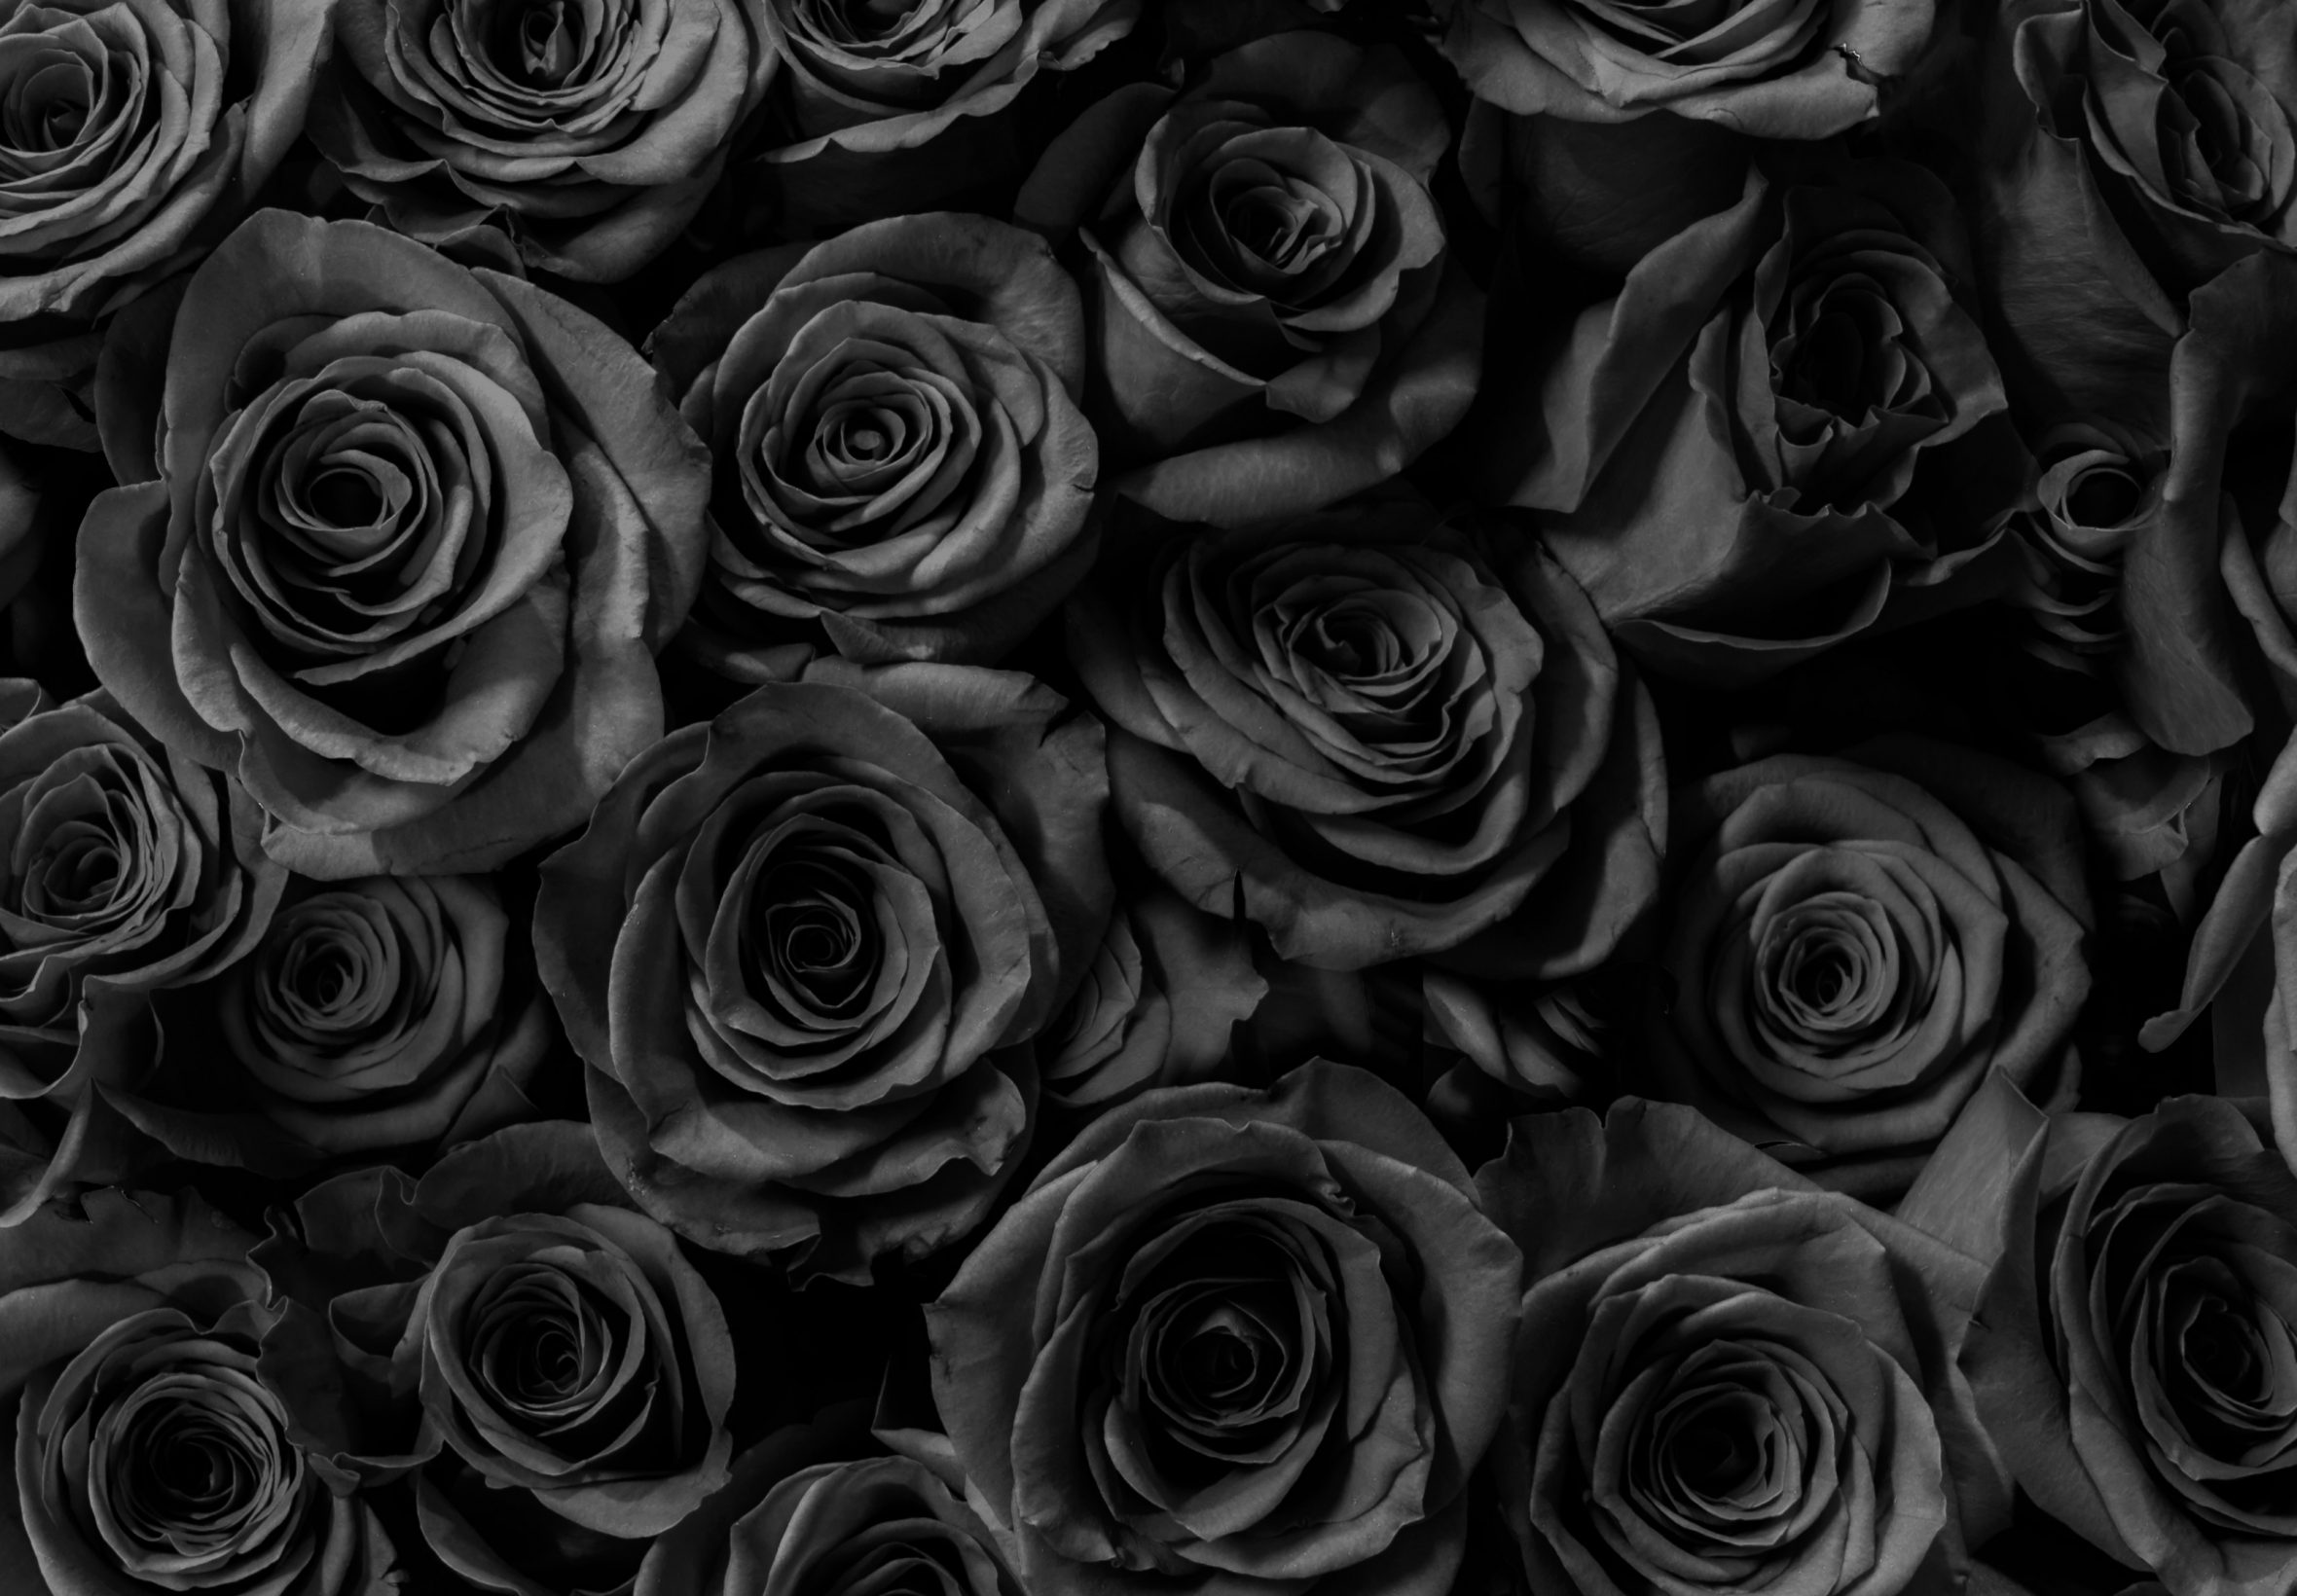 2360x1640 iPad Air wallpaper 4k Black Roses Gift Anniversary iPad Wallpaper 2360x1640 pixels resolution